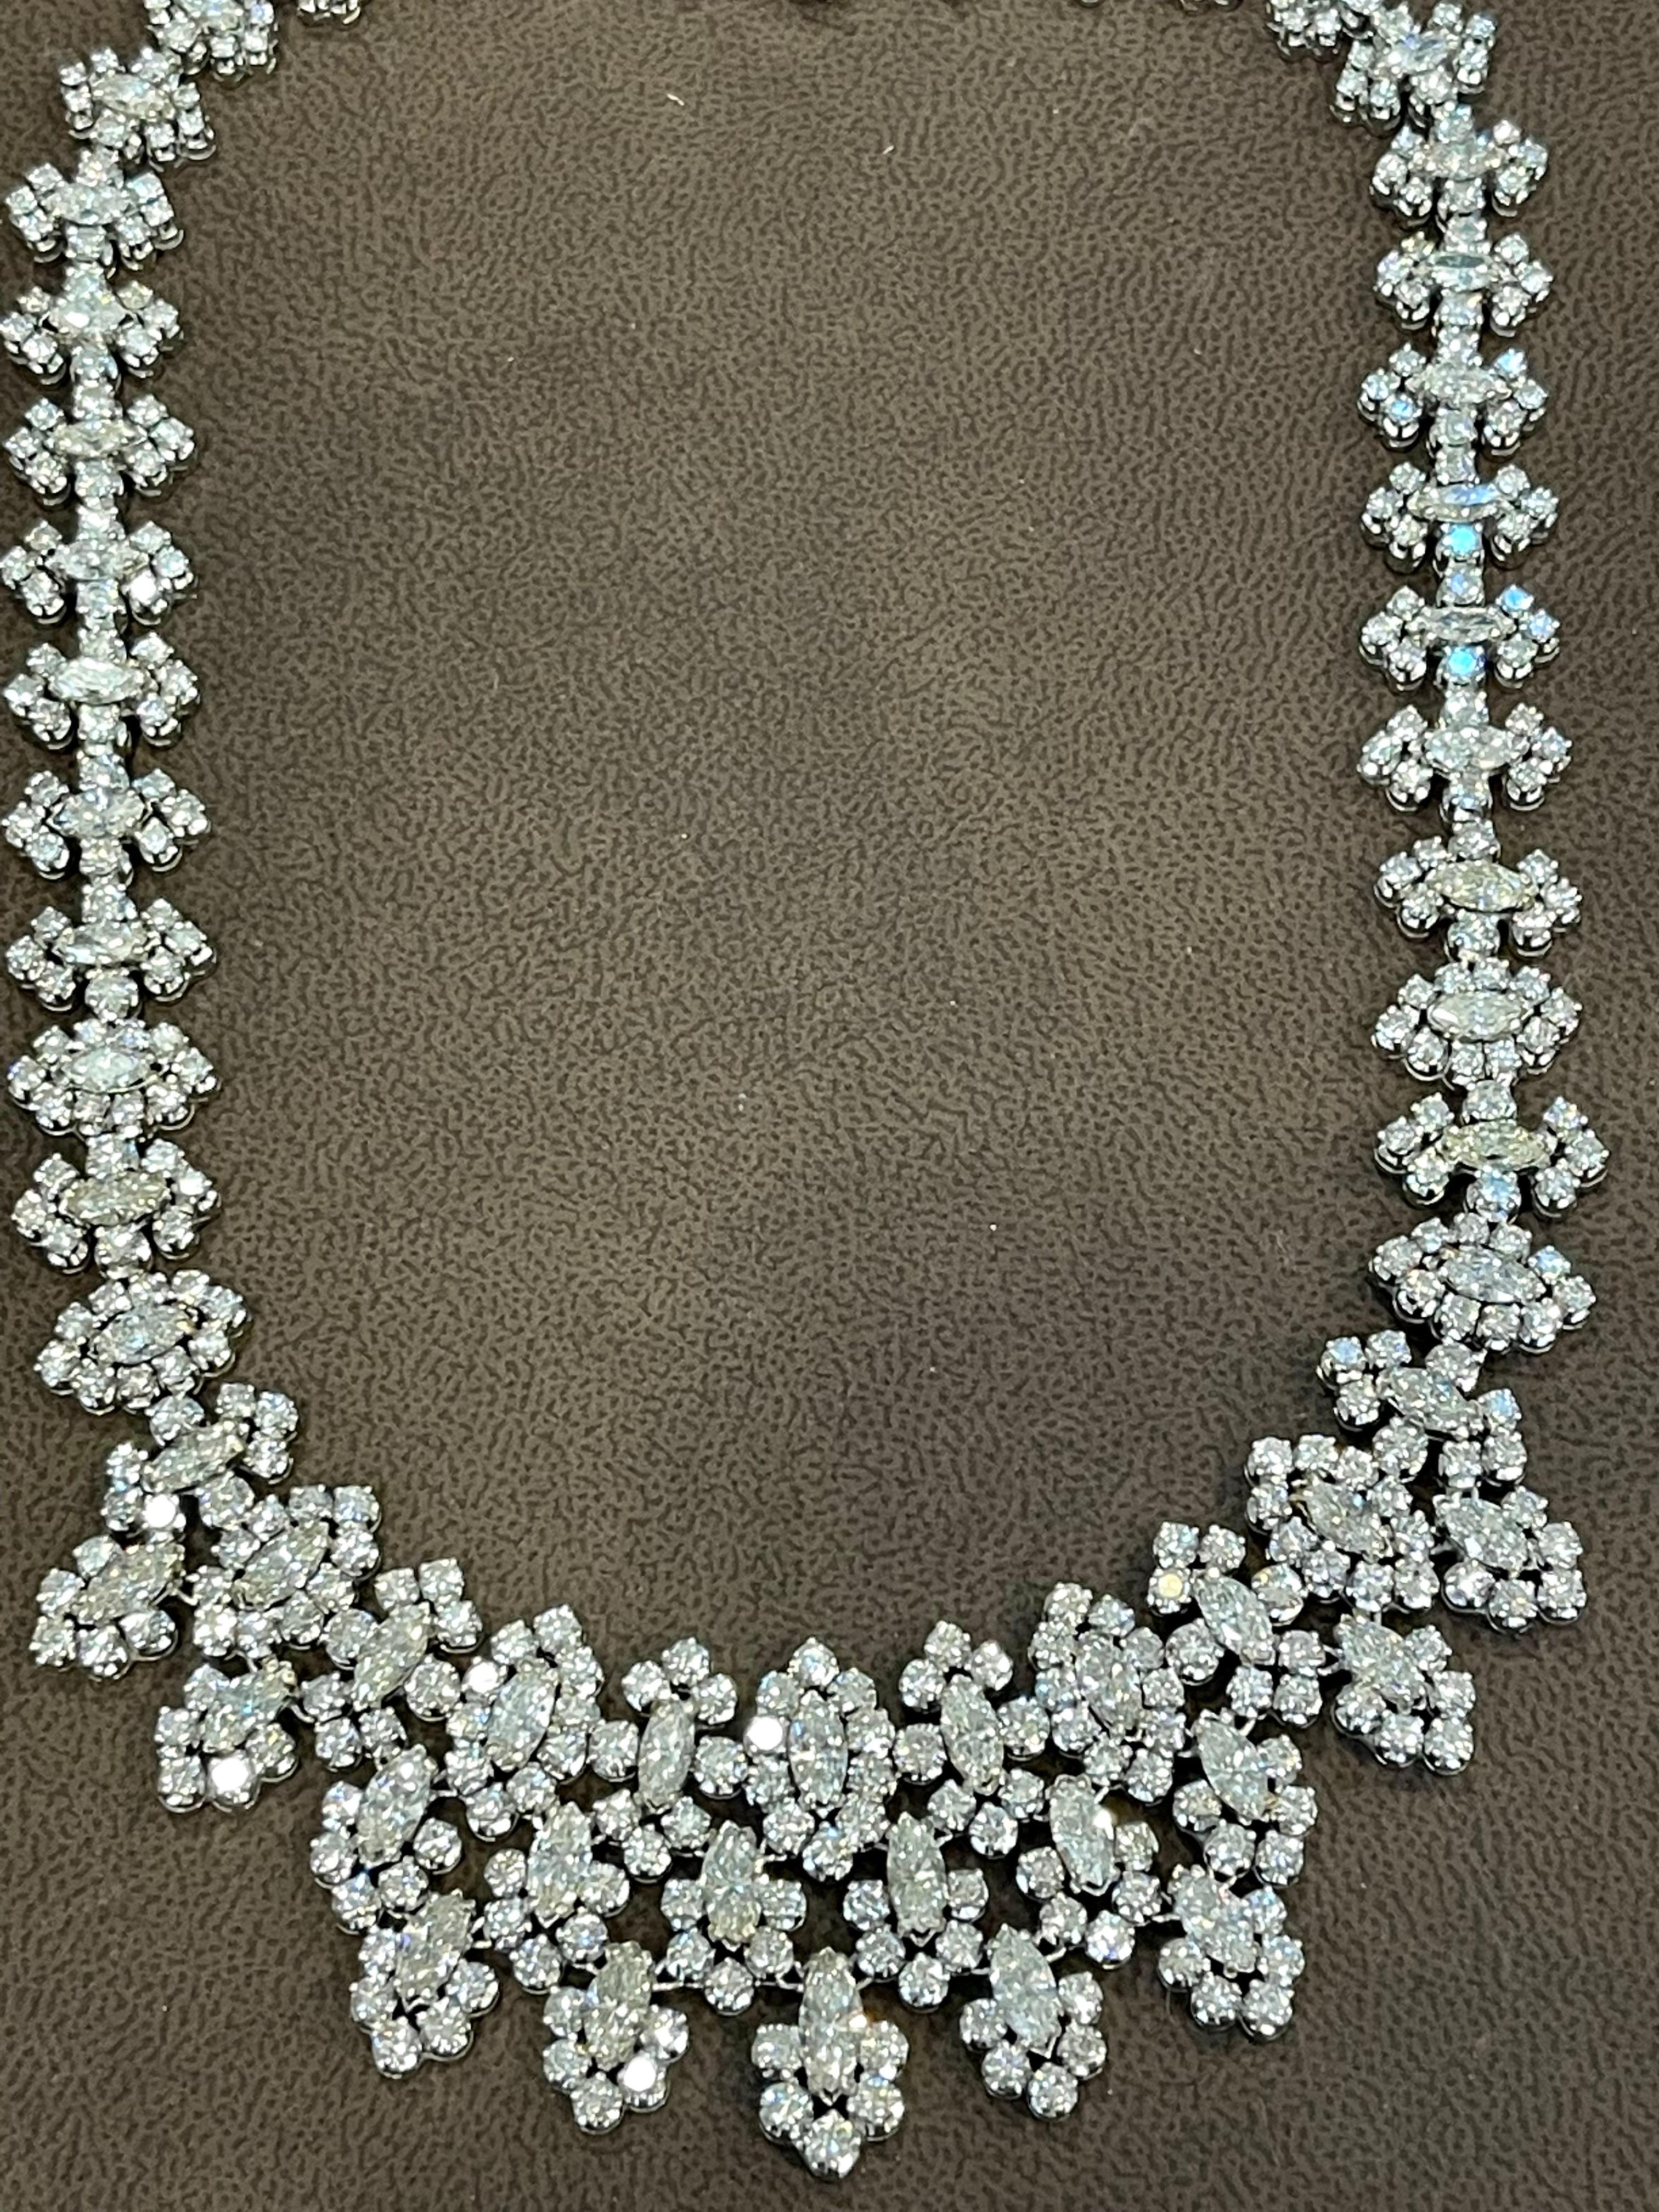 55 Ct Diamond Bridal Necklace 18 Karat White Gold 107 Gm, Estate For Sale 3